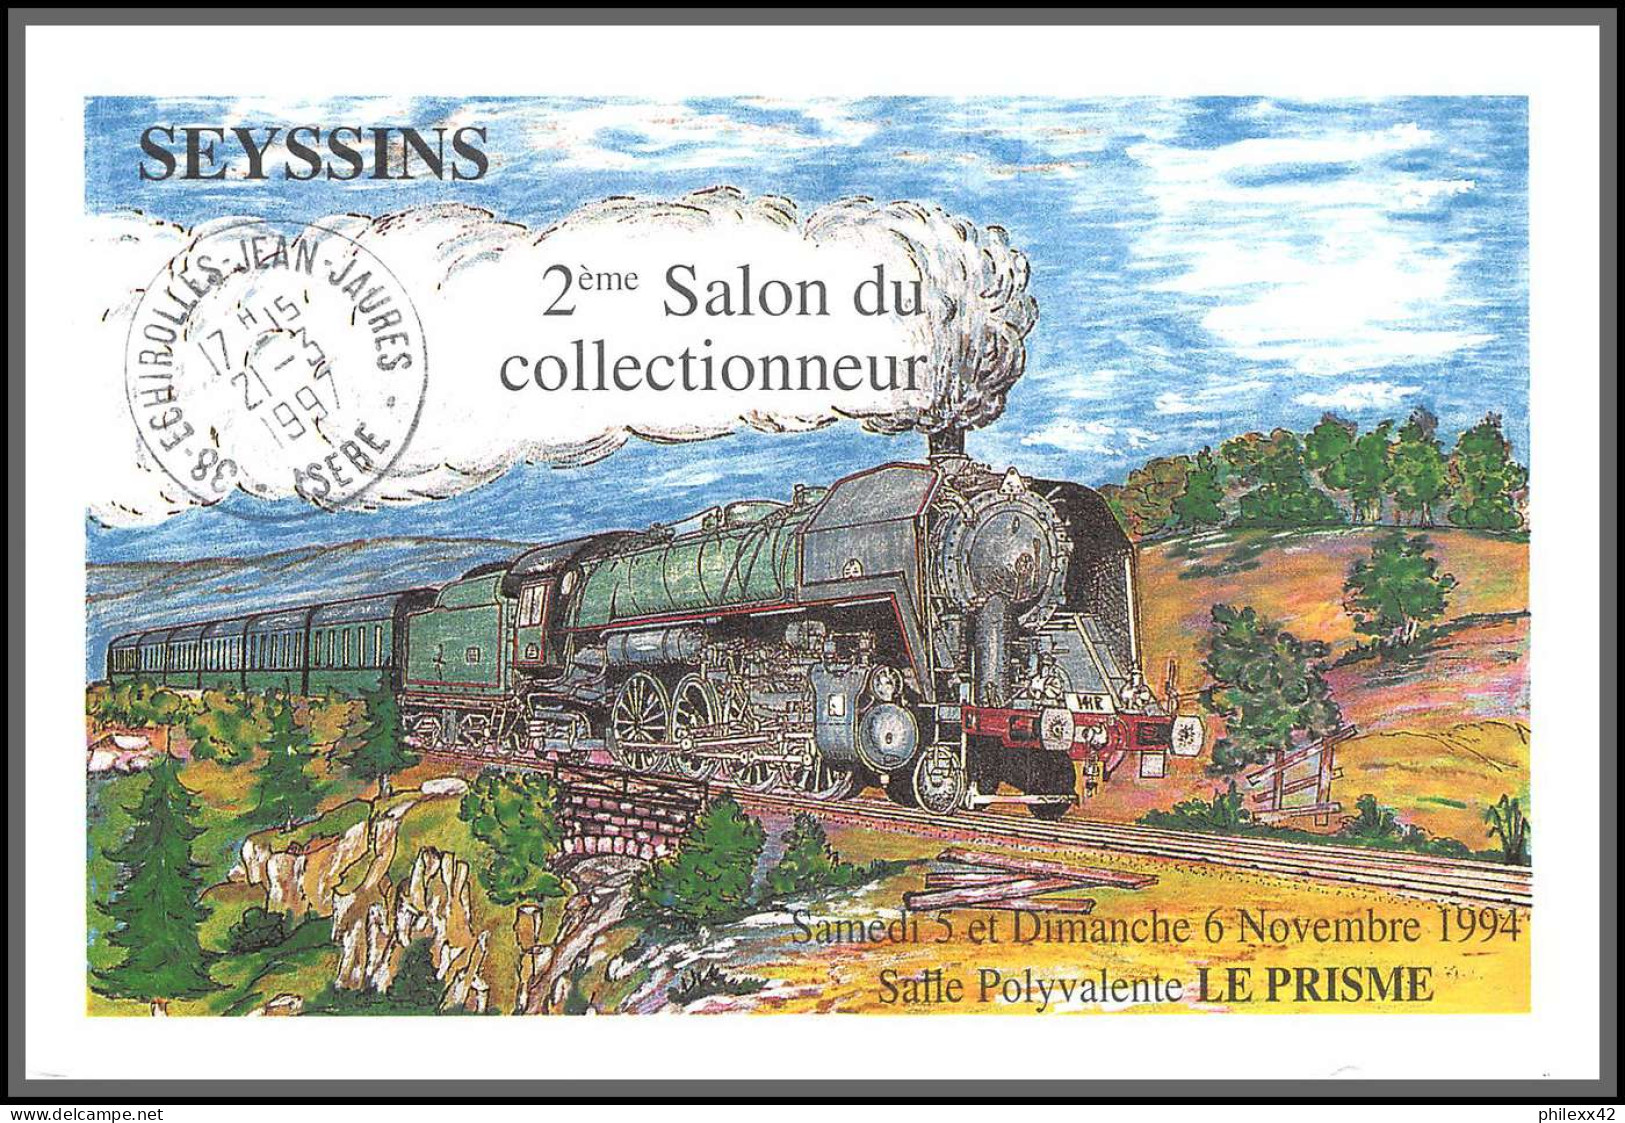 74321 Mixte Atm Briat 17/3/1997 Combani Mayotte Echirolles Isère France Carte Postcard Colonies  - Lettres & Documents